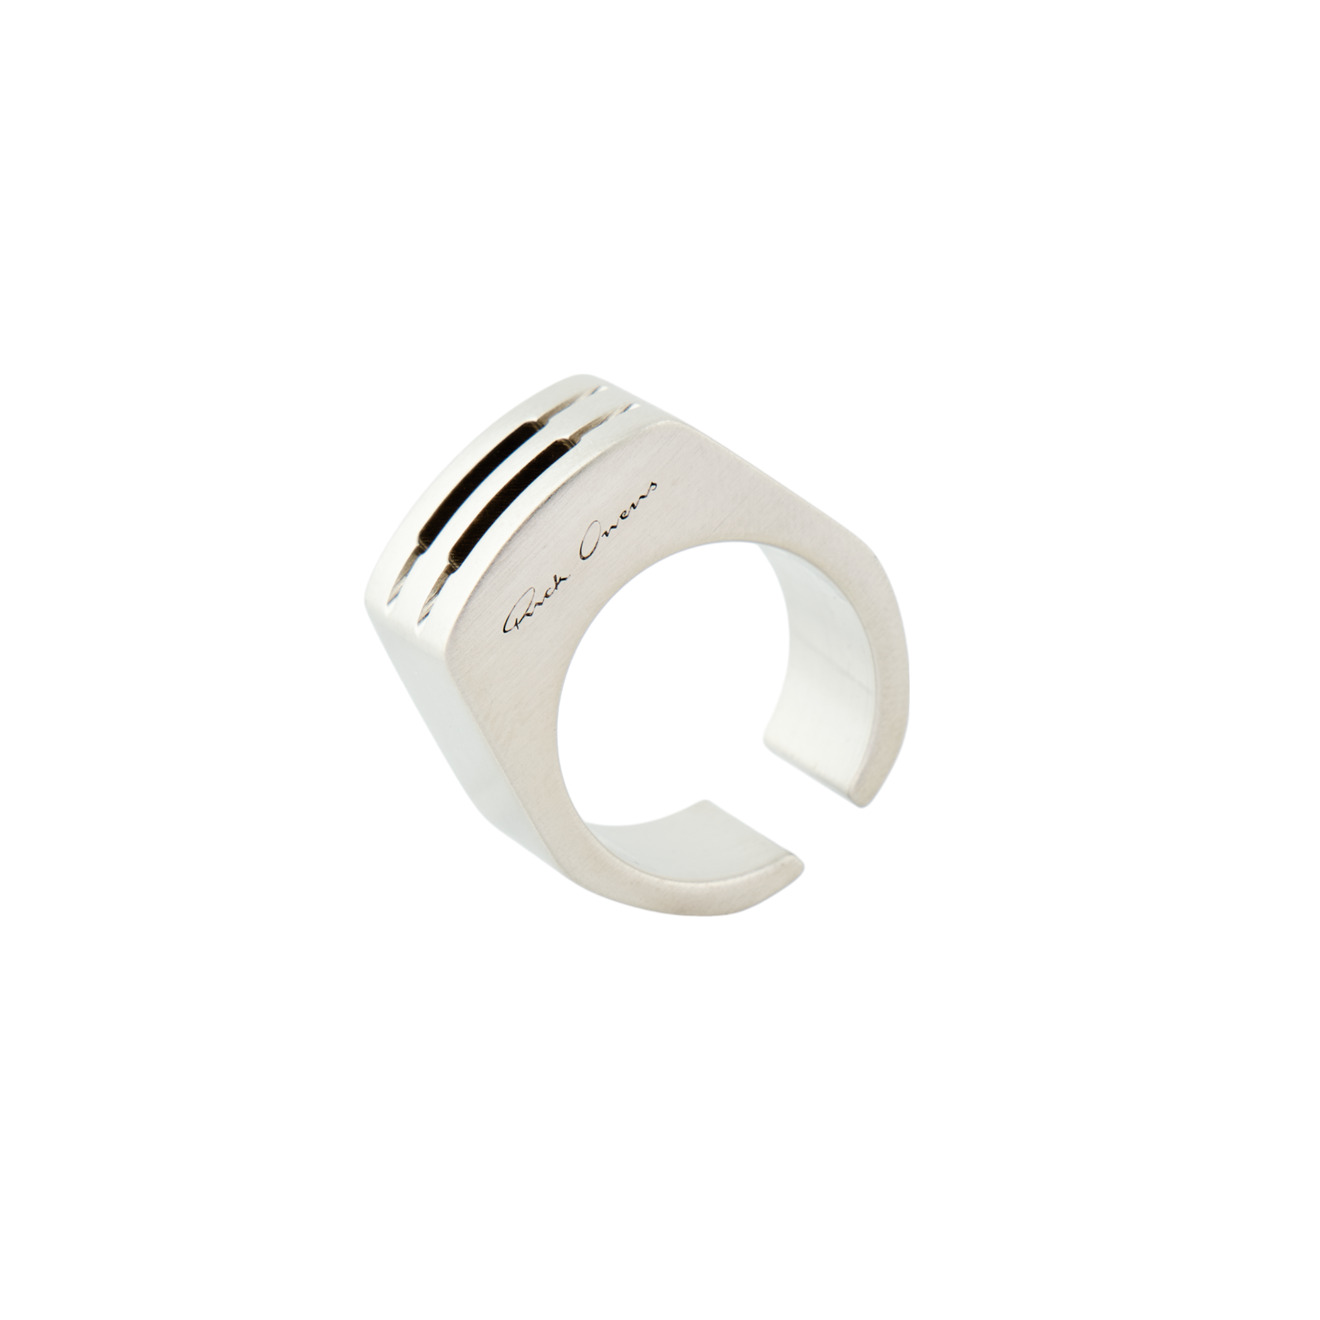 Rick Owens Серебристое открытое кольцо GRILL lisa smith серебристое открытое кольцо с чёрным кабашоном и круглыми элементами